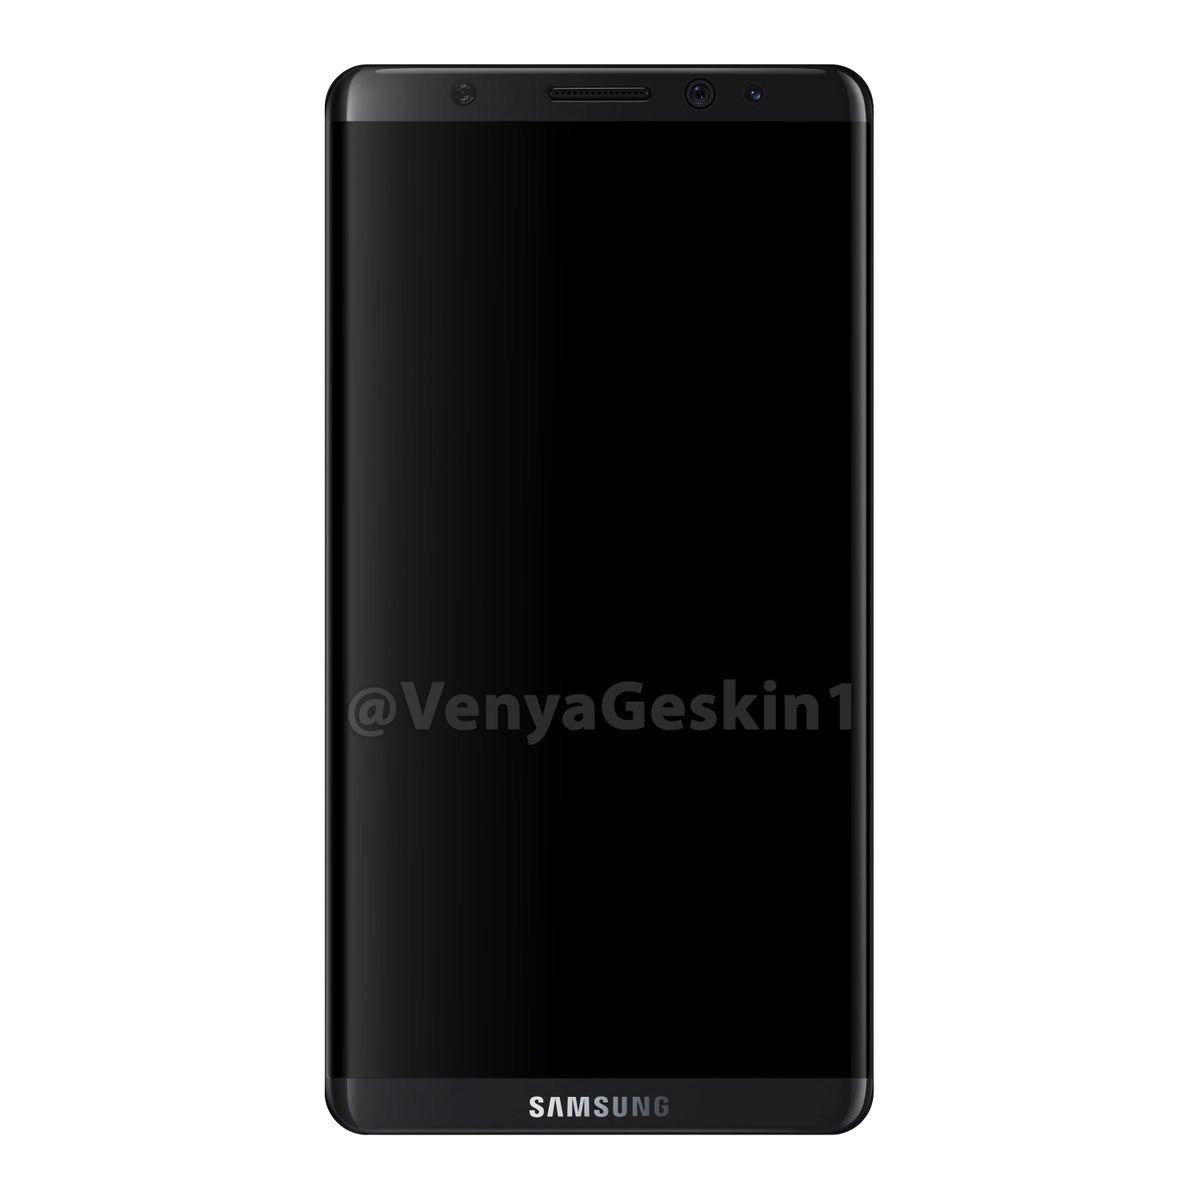 Samsung-Galaxy-S8-Concept-2.jpg